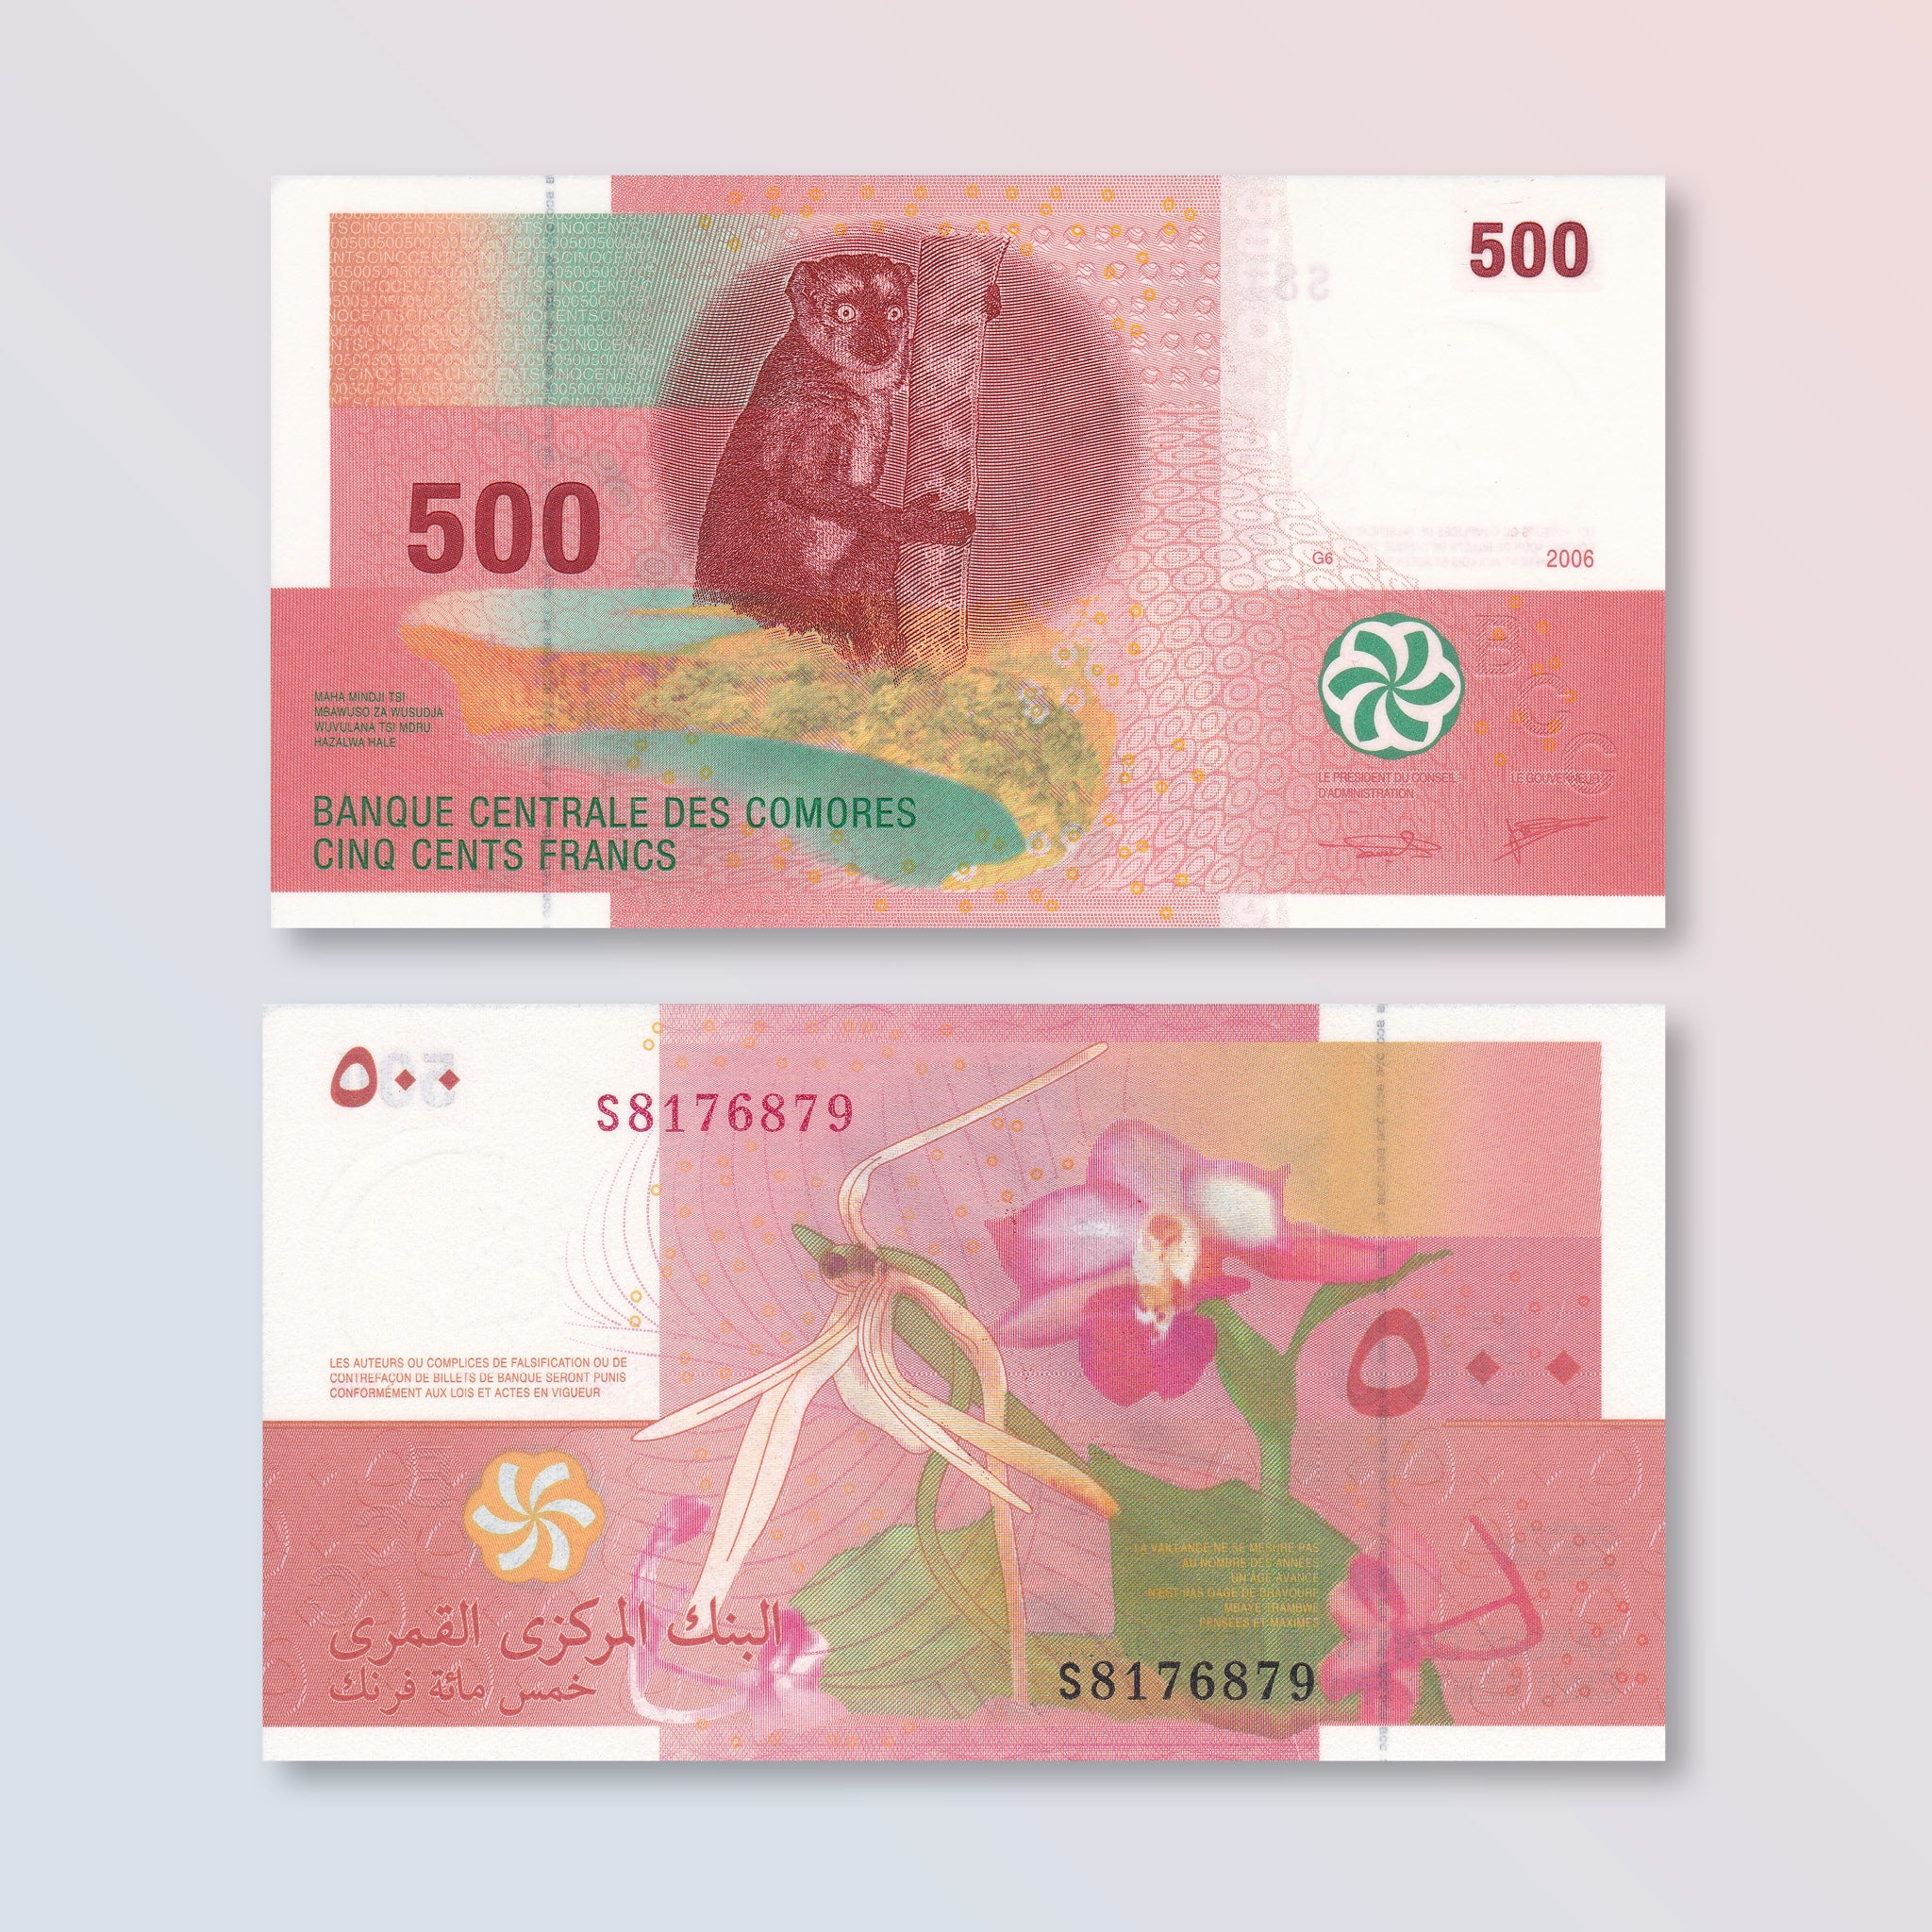 Comoros 500 Francs, 2006 (2020), B306c, P15a, UNC - Robert's World Money - World Banknotes